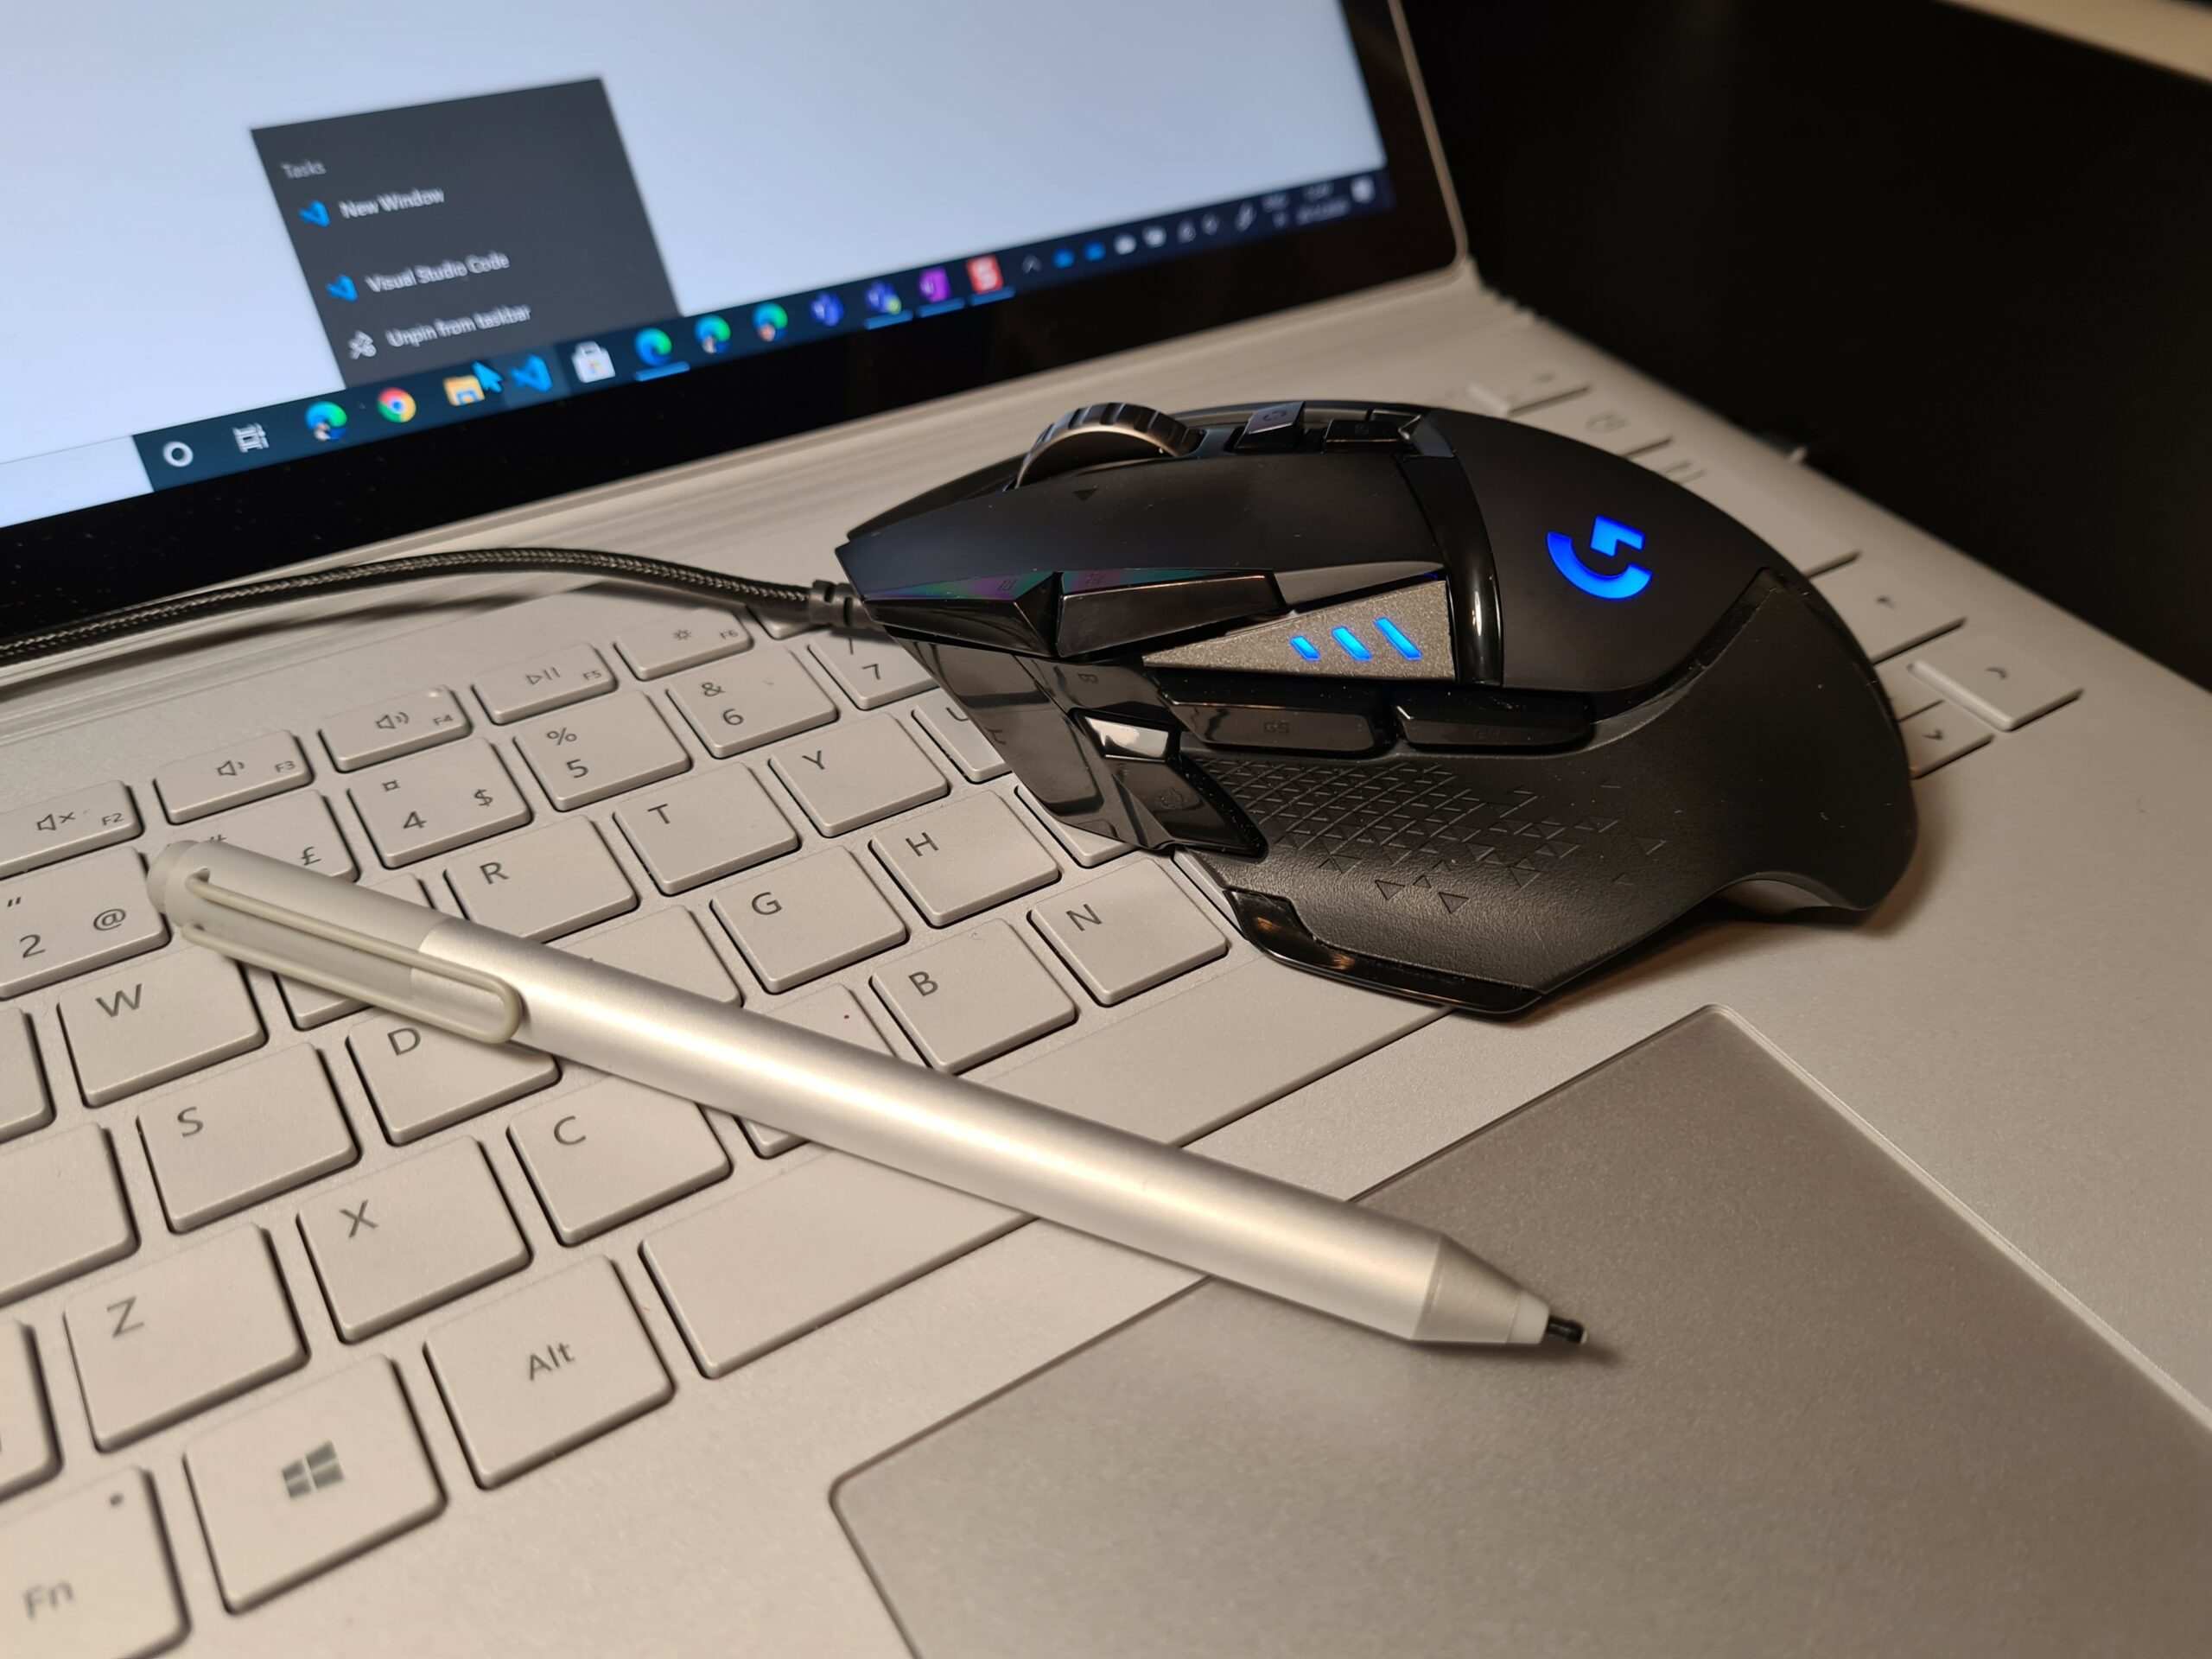 Laptop keyboard, Microsoft Surface Pen and Logitech mouse